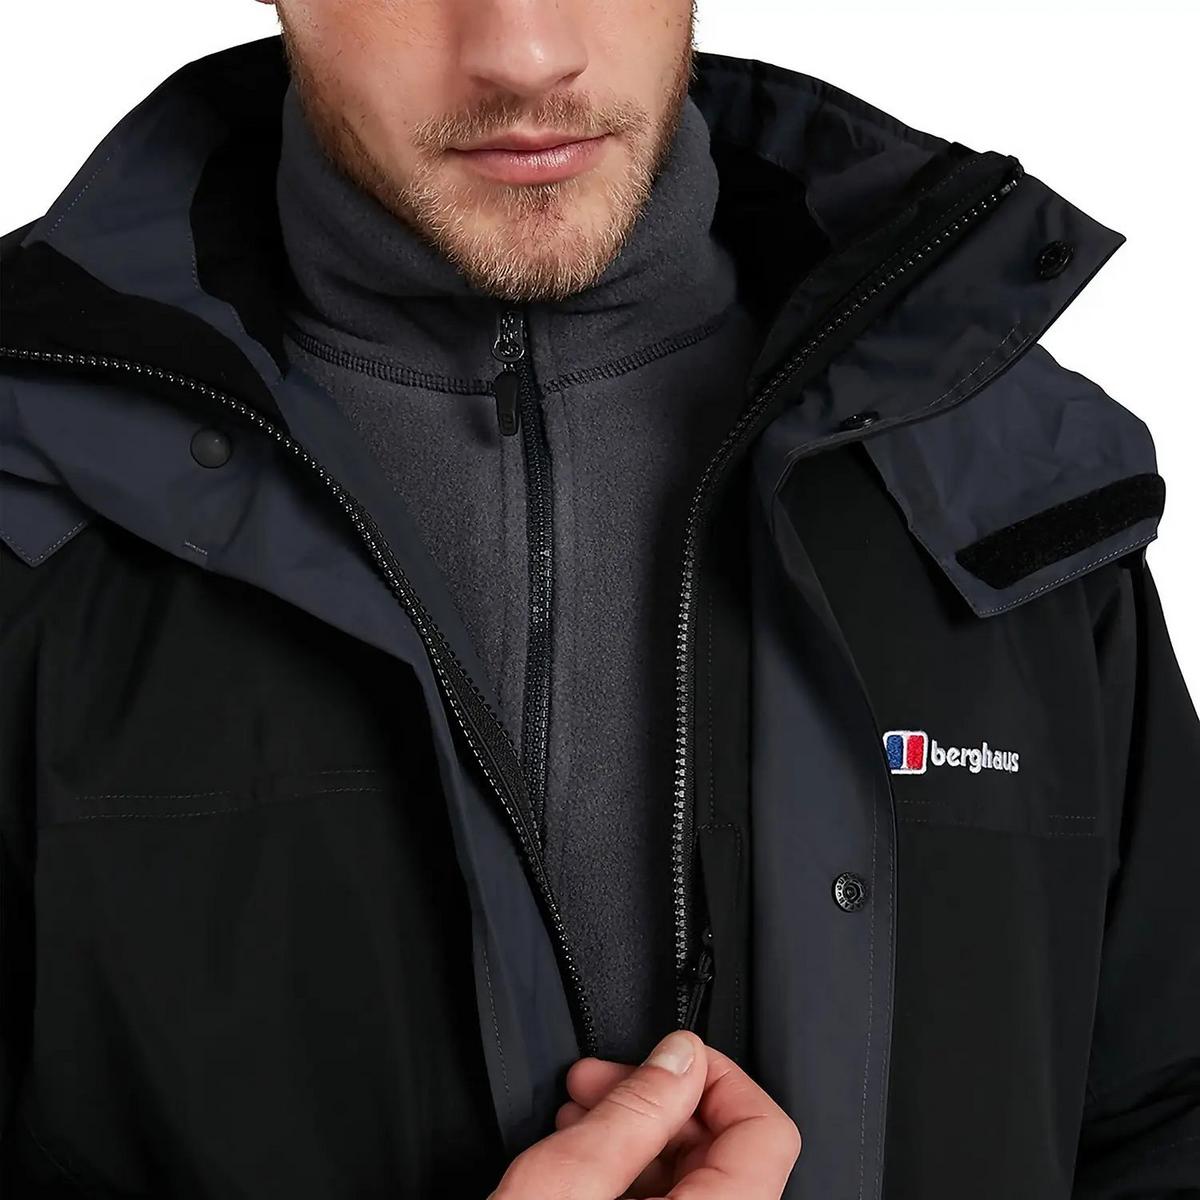 Berghaus Men's Cornice Waterproof Interactive Jacket - Black